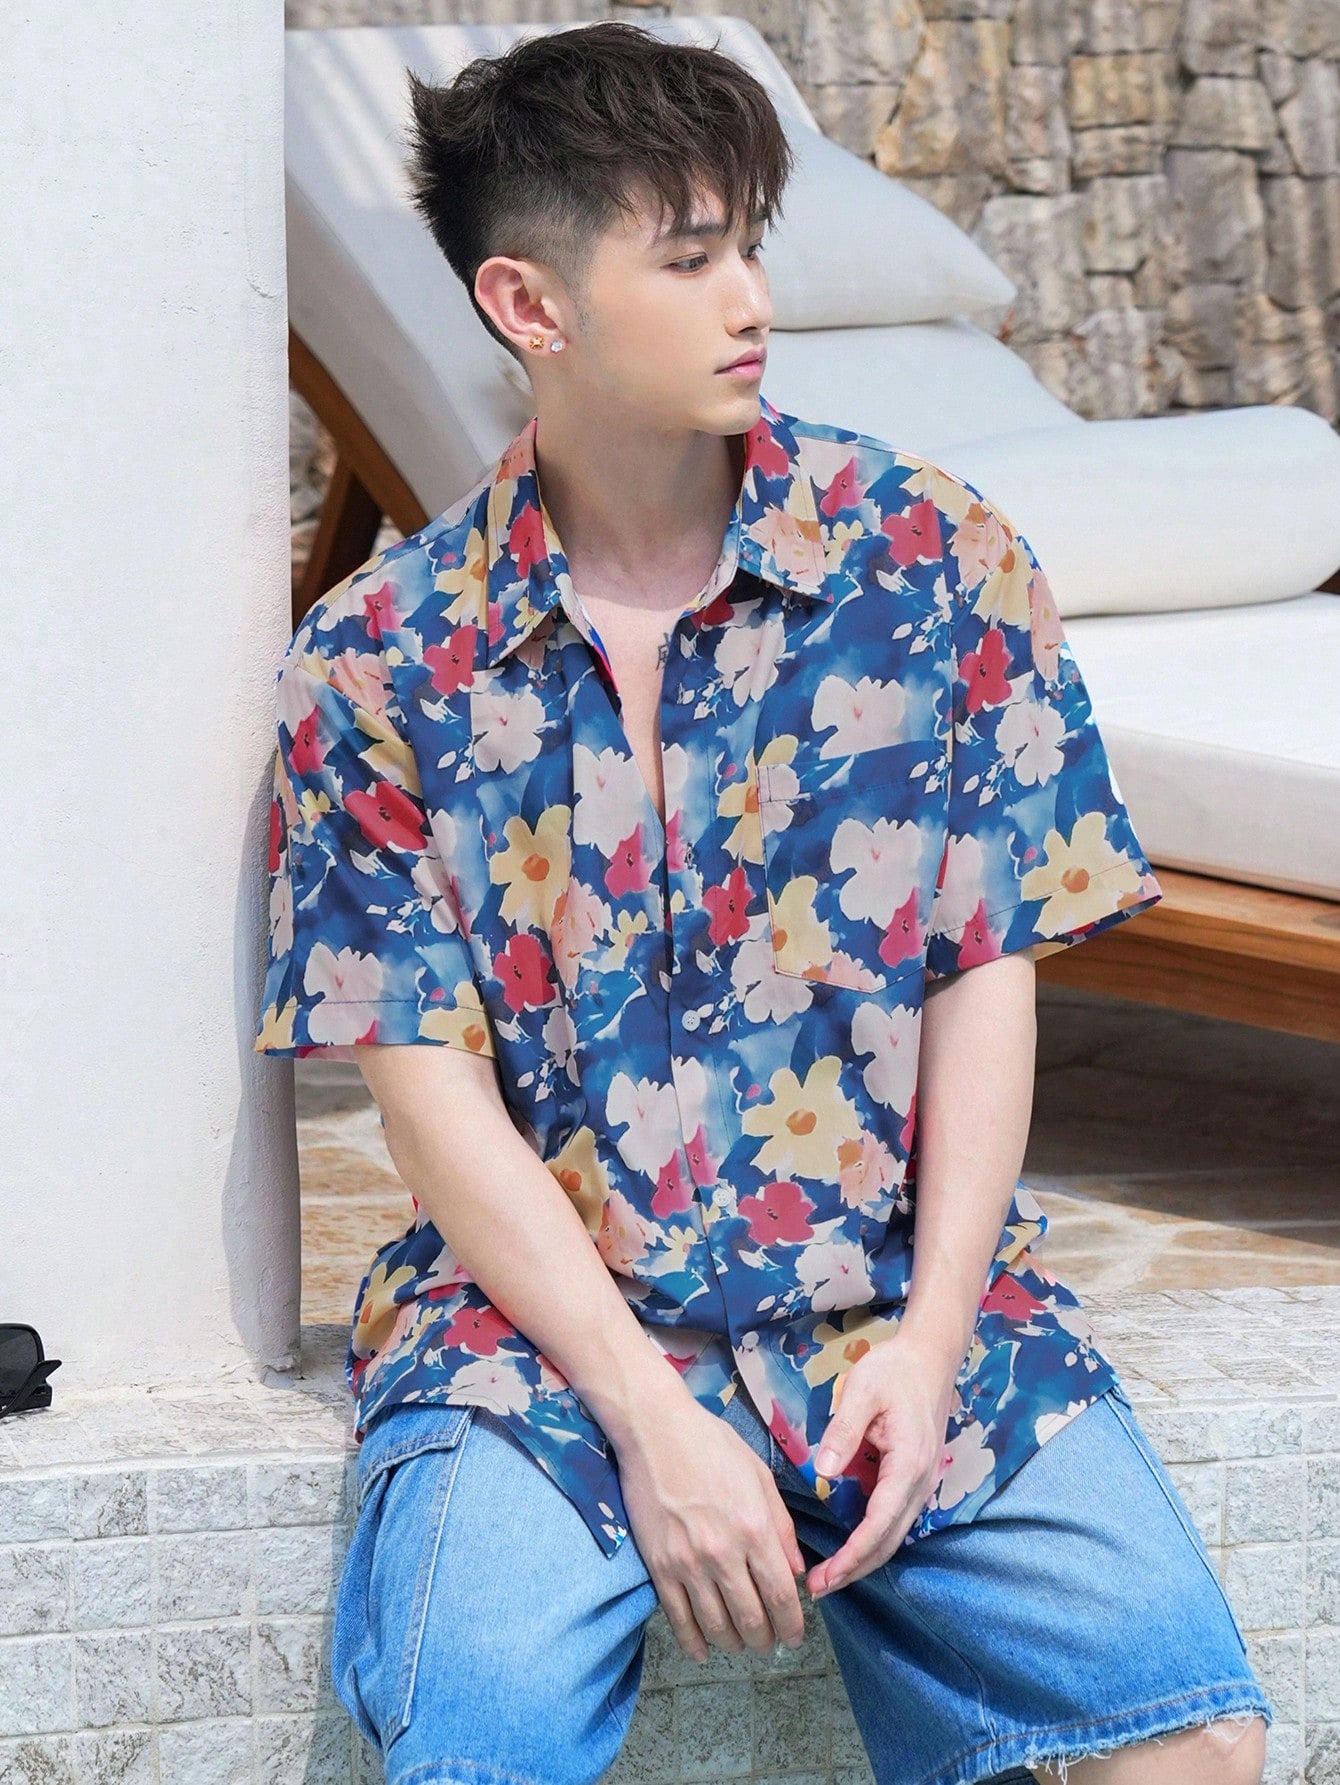 Men All-Over Floral Print Short Sleeve Summer Shirt